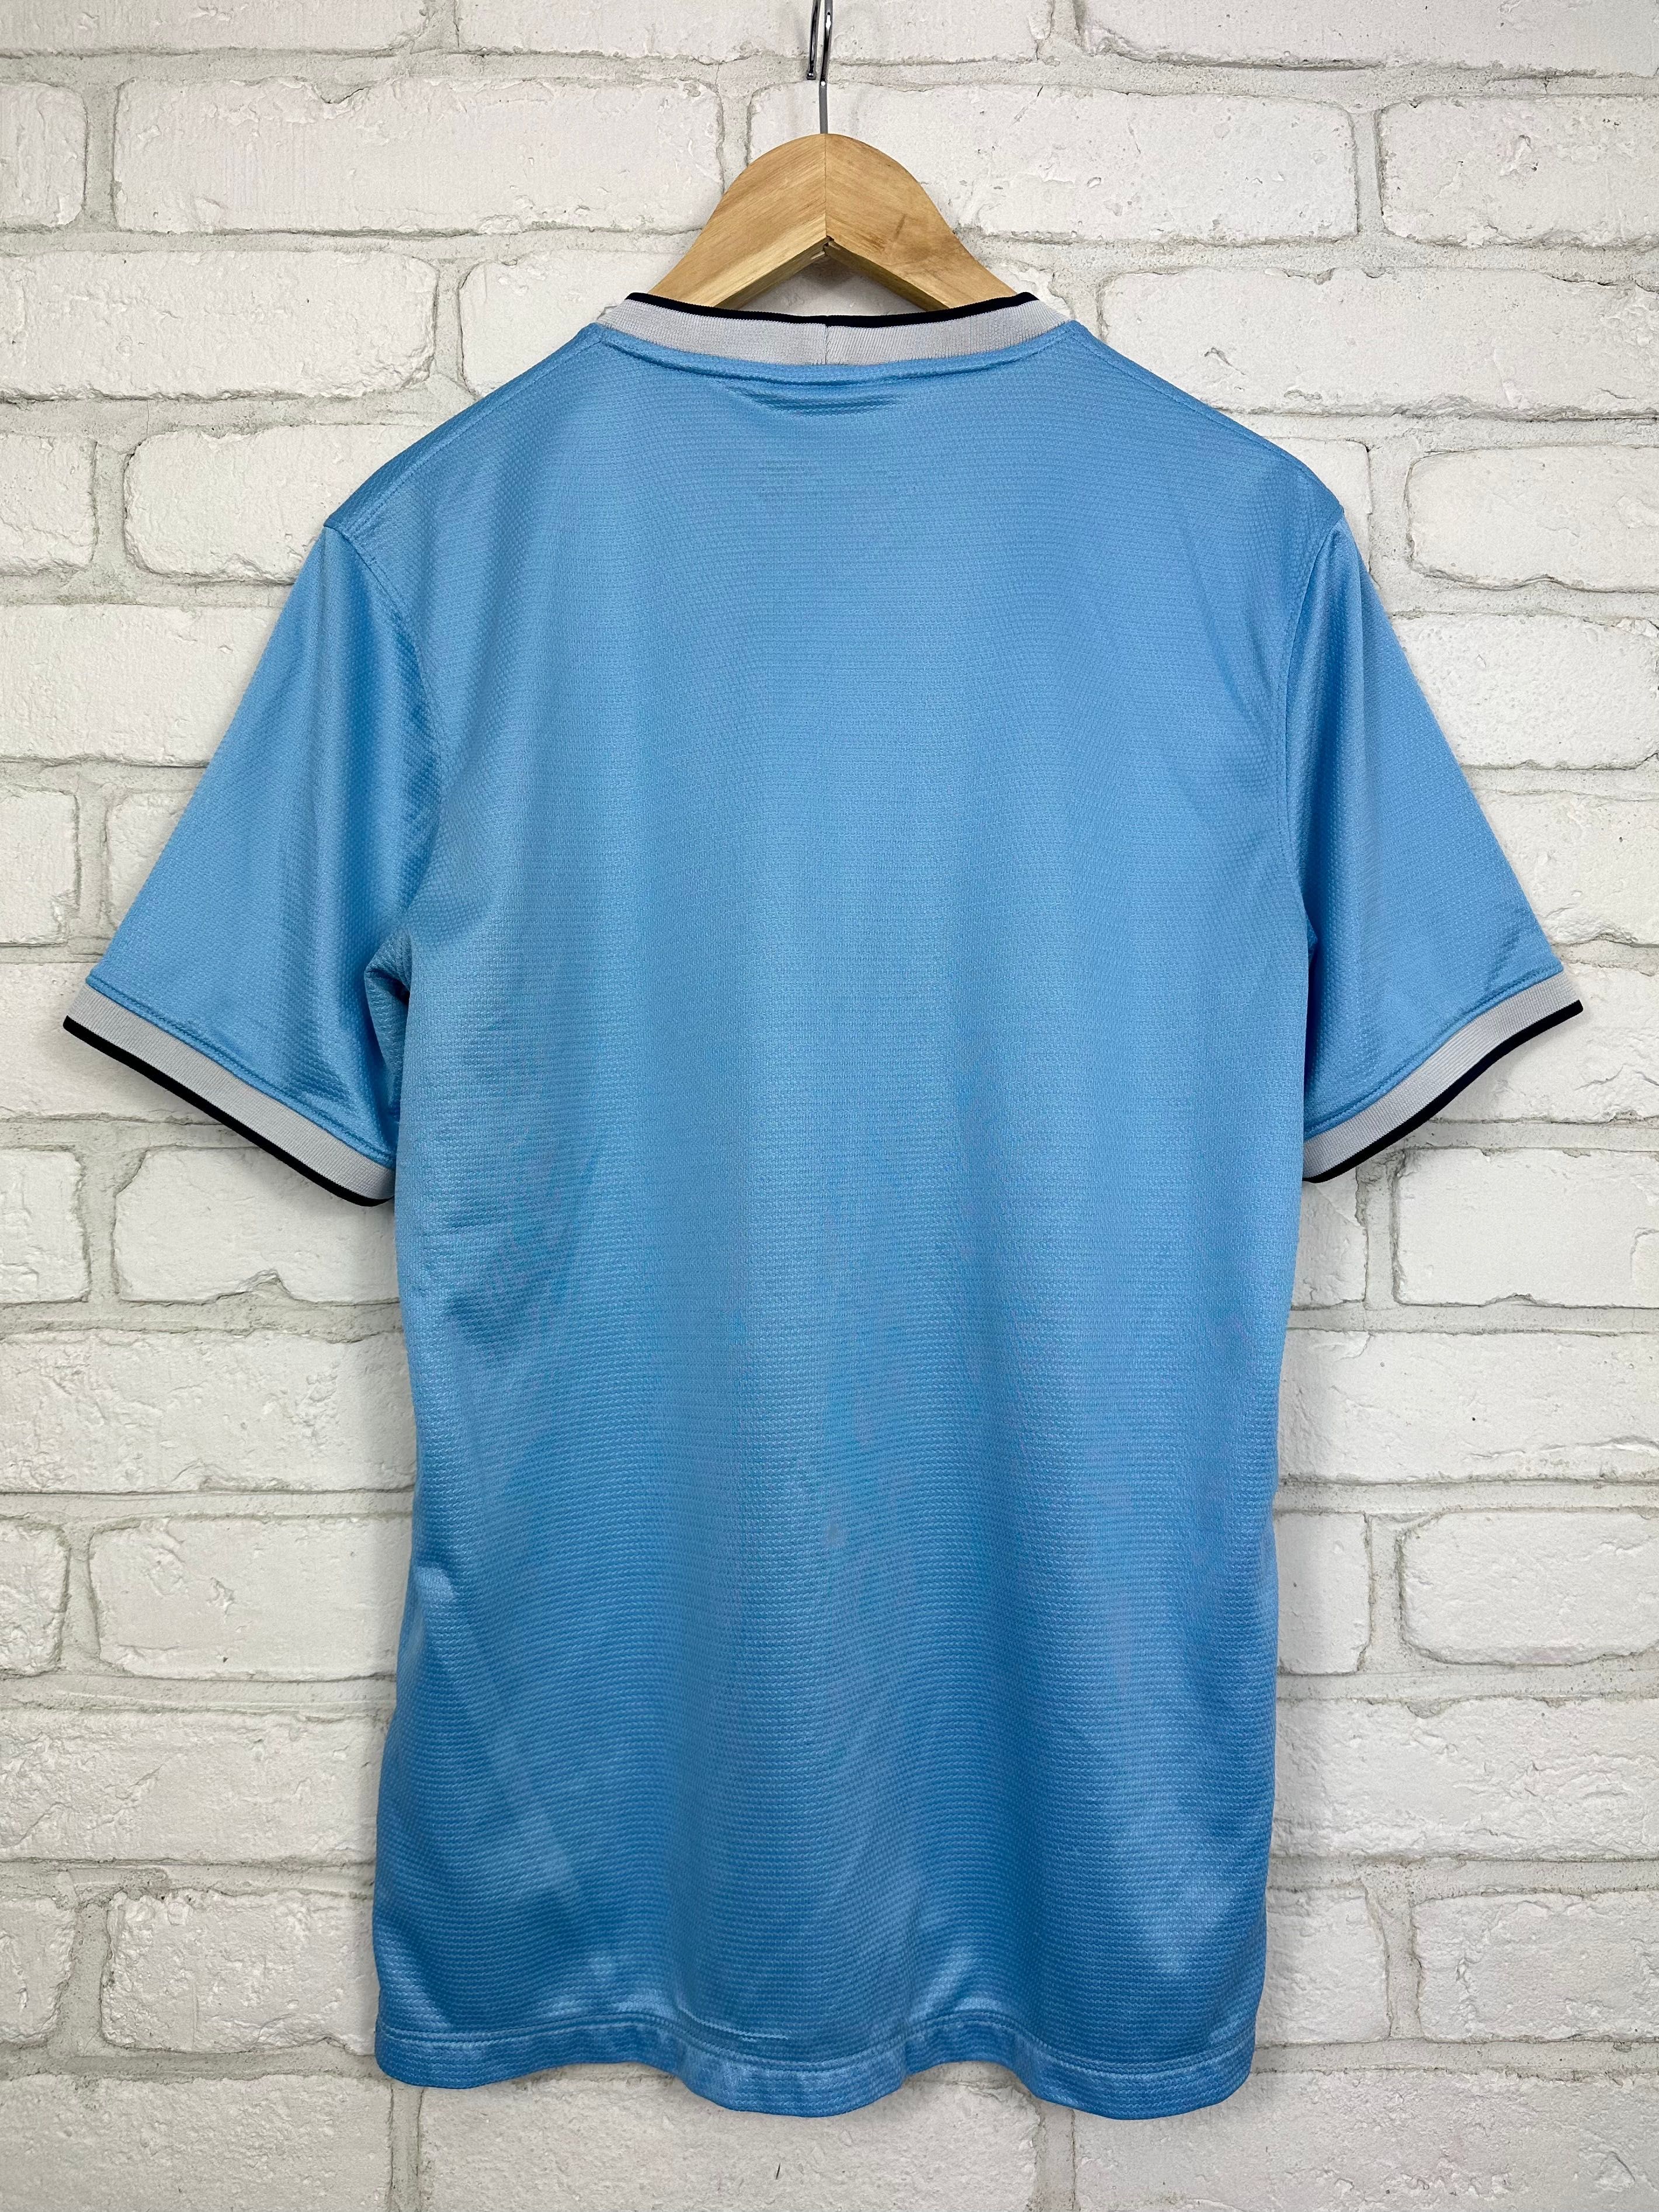 Koszulka piłkarska Nike Manchester City 2013/14 koszulka domowa